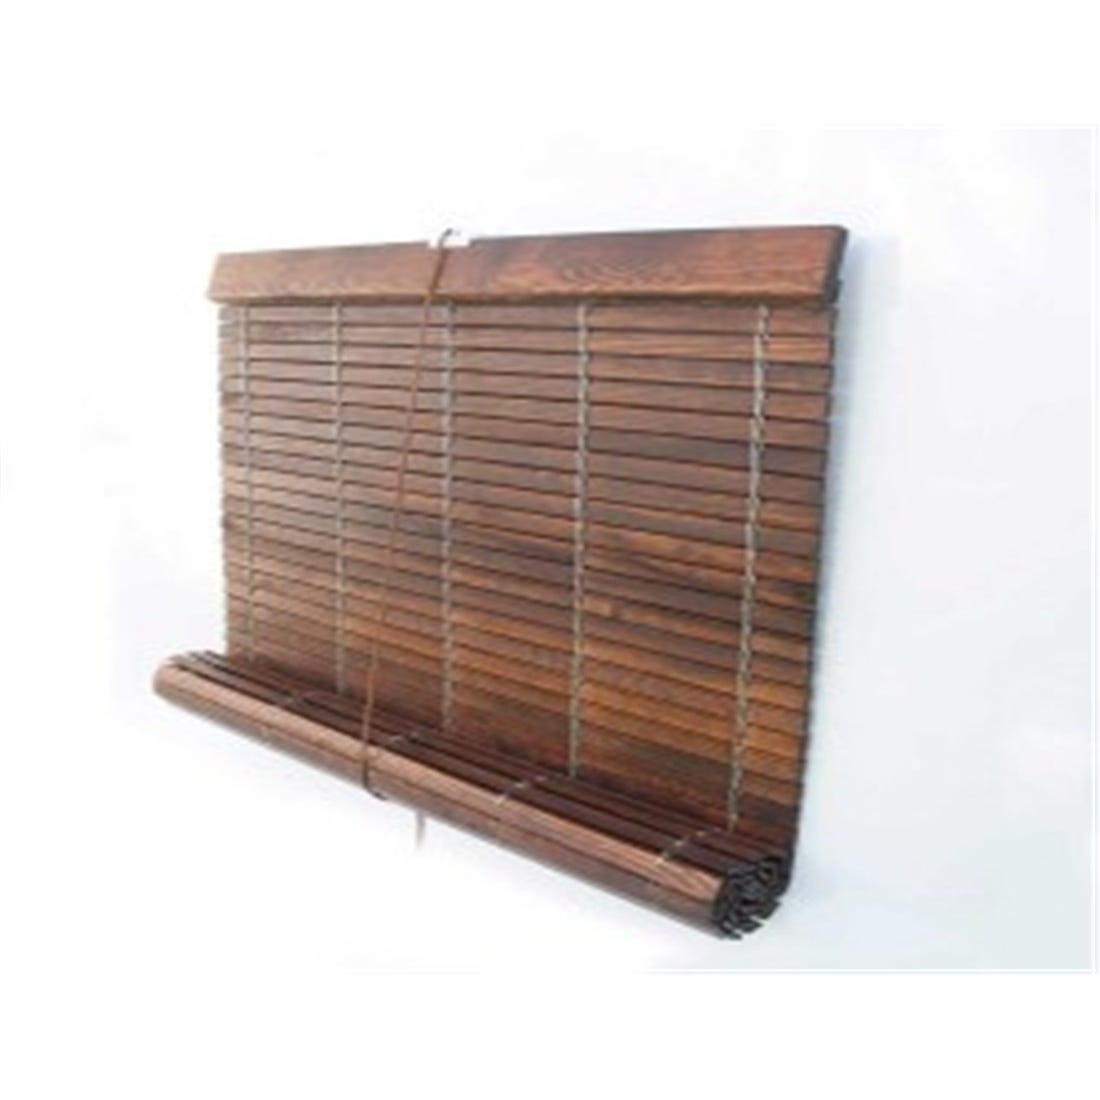 Aplicación interior de persianas enrollables de madera horizontales.